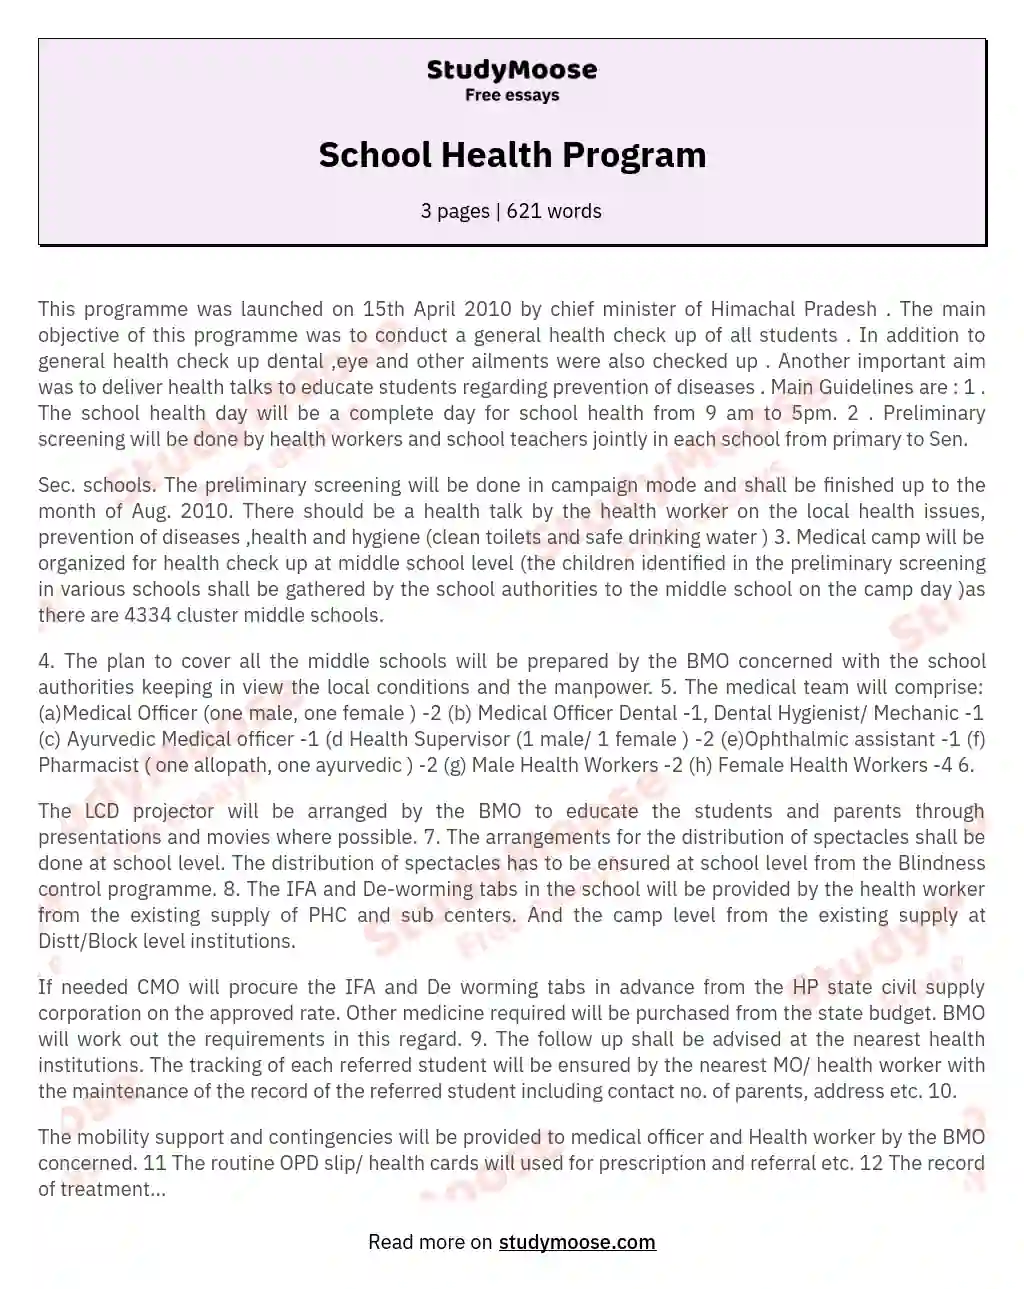 School Health Program essay